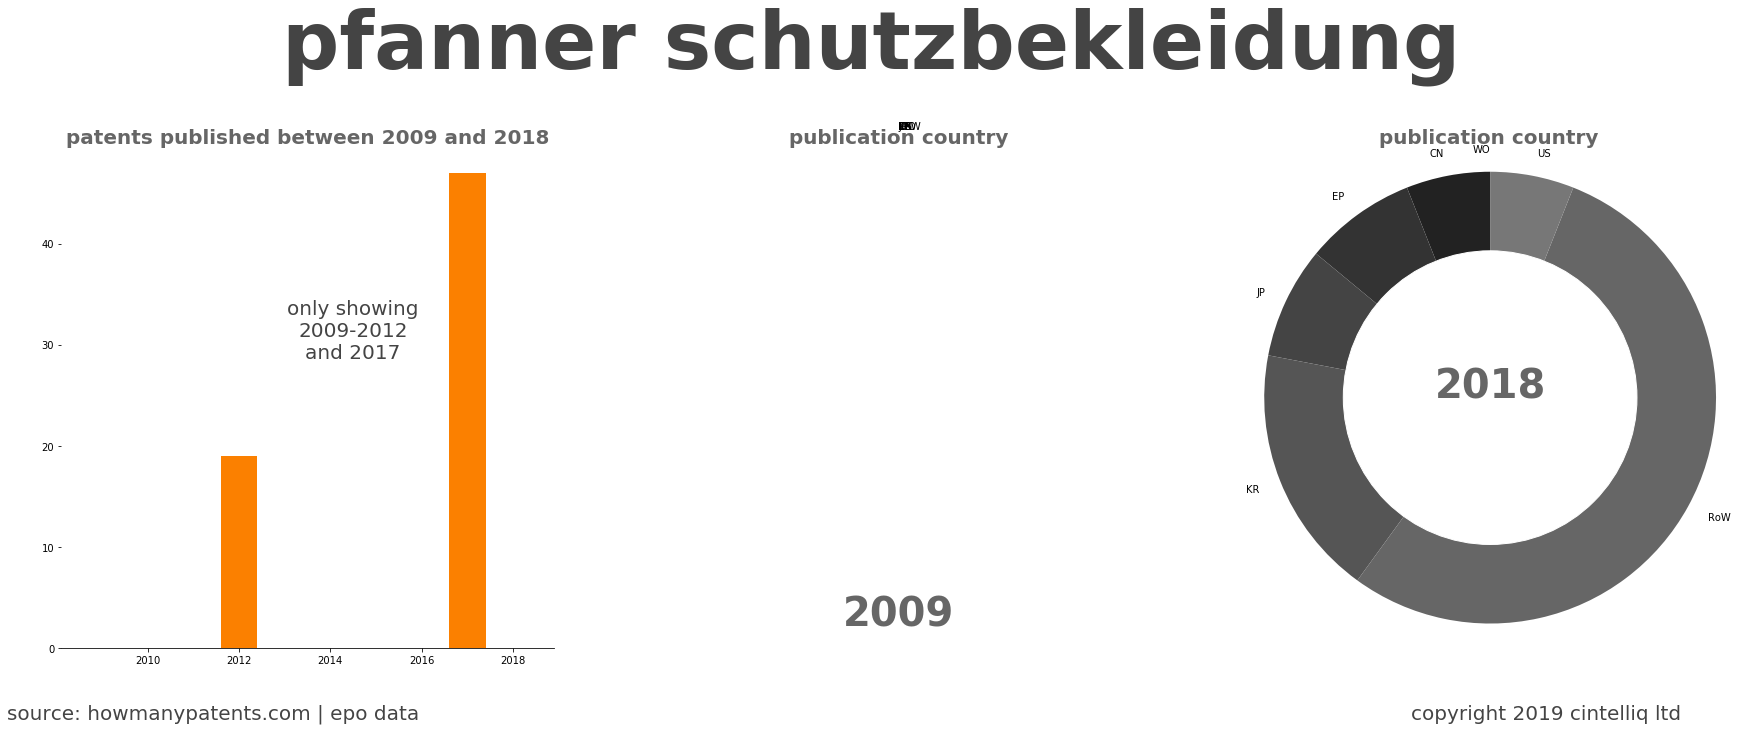 summary of patents for Pfanner Schutzbekleidung